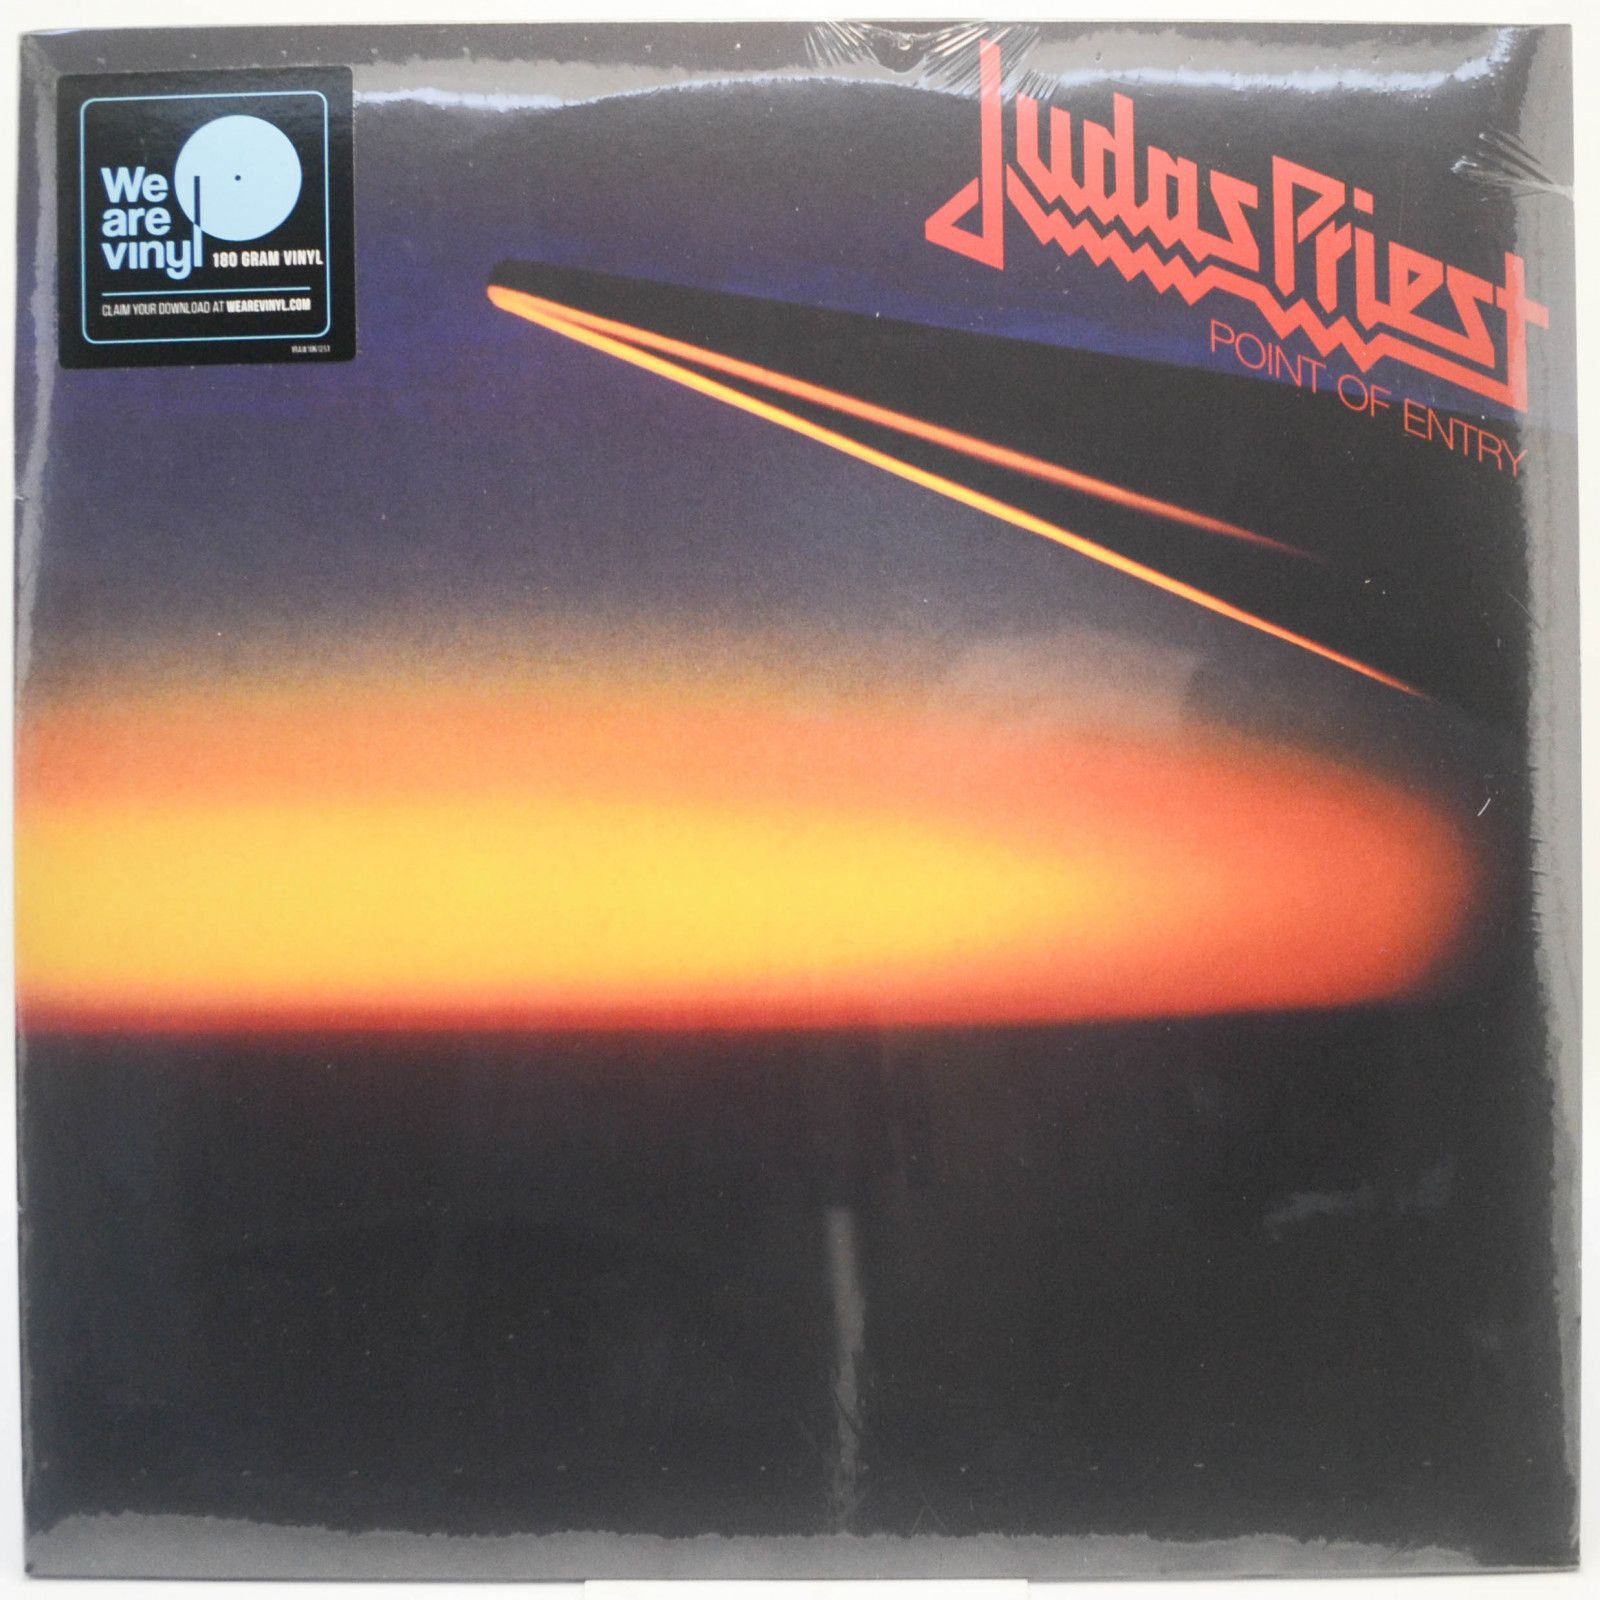 Judas Priest — Point Of Entry, 1981